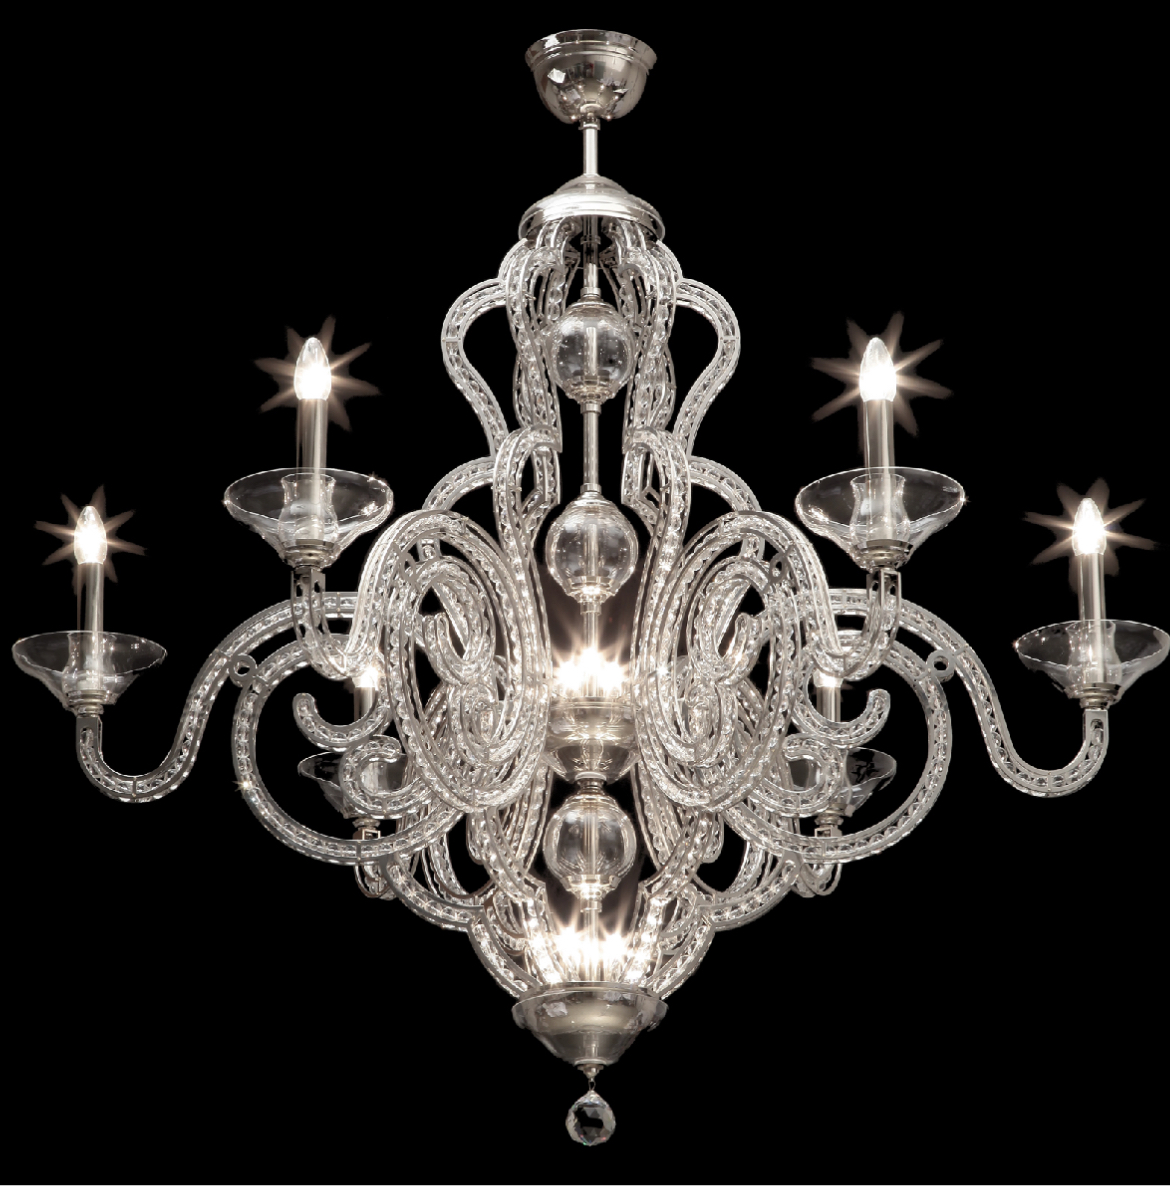 An 'Anastasia' chandelier by Gladee